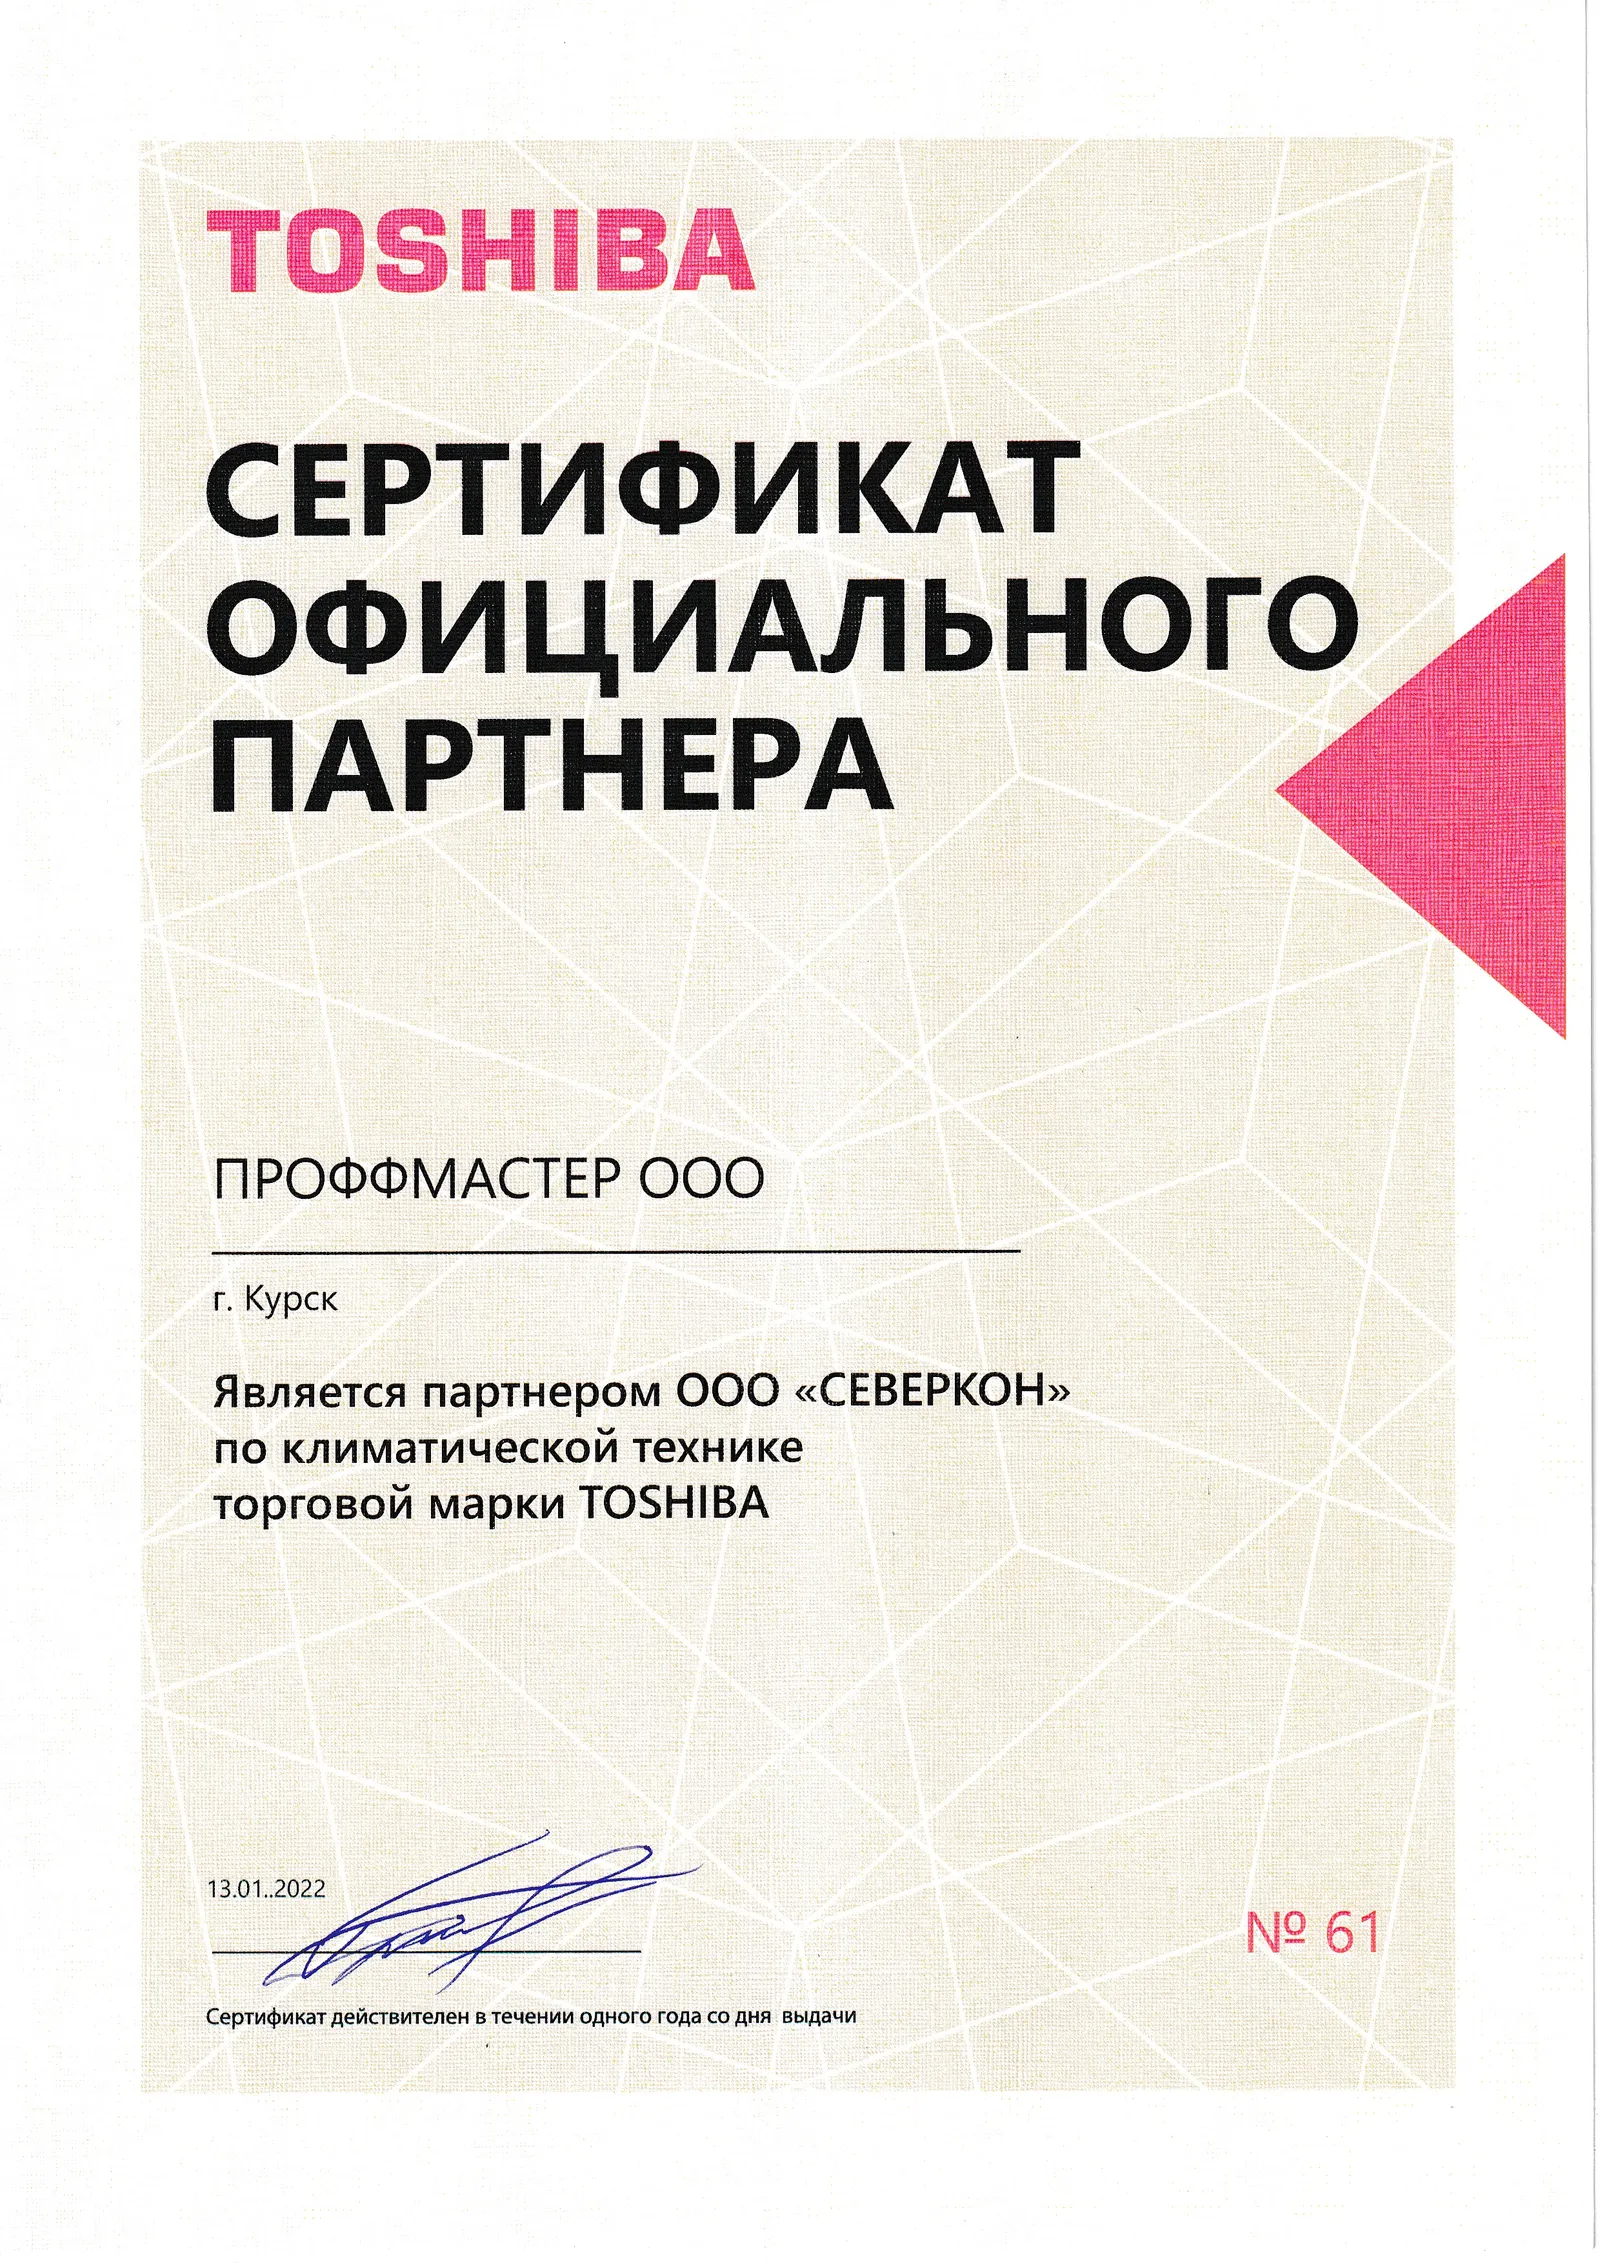 Сертификат Toshiba